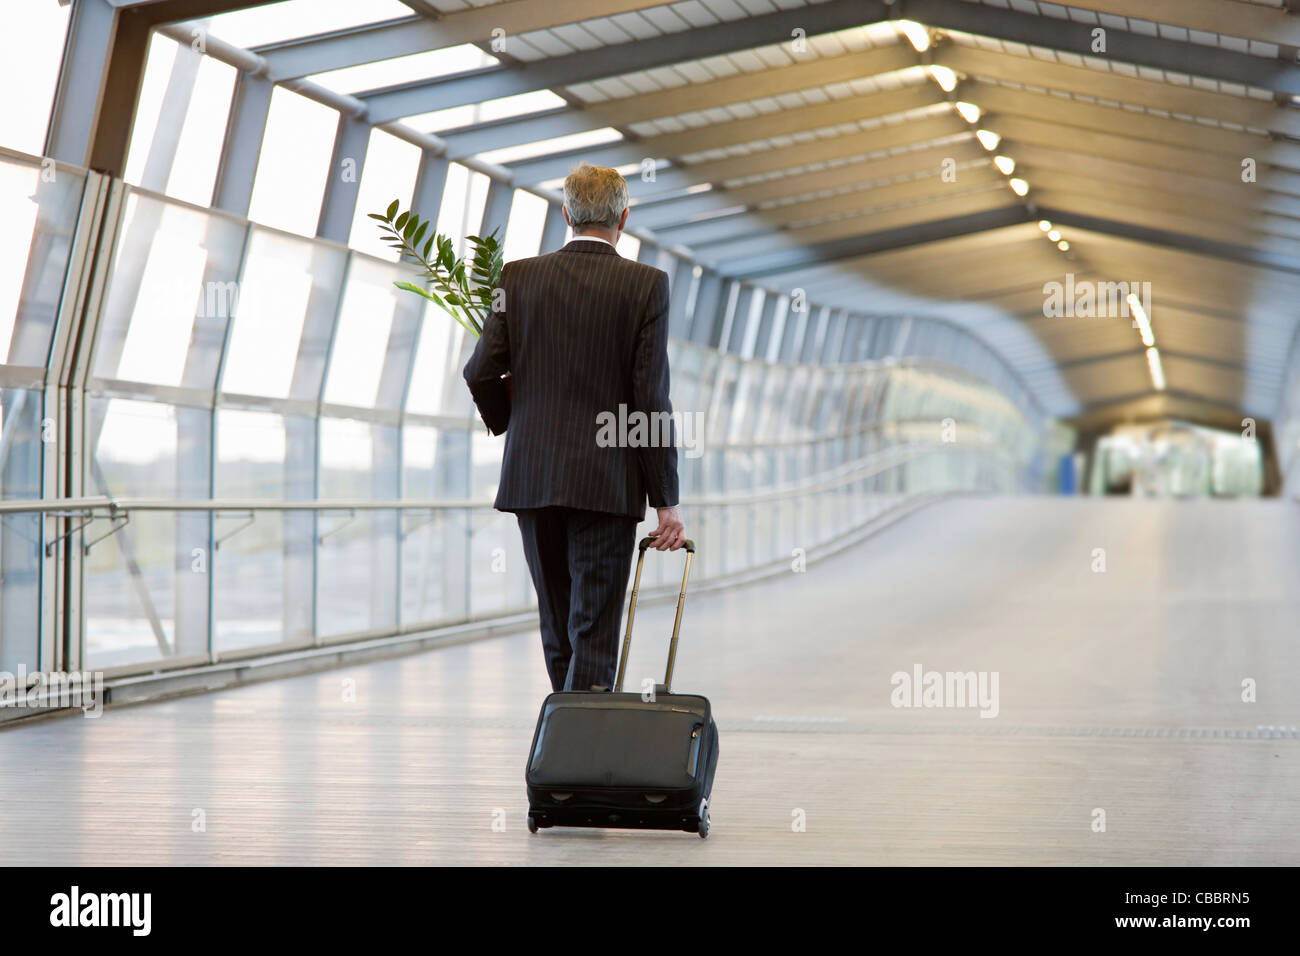 Businessman wheeling luggage with plant Stock Photo